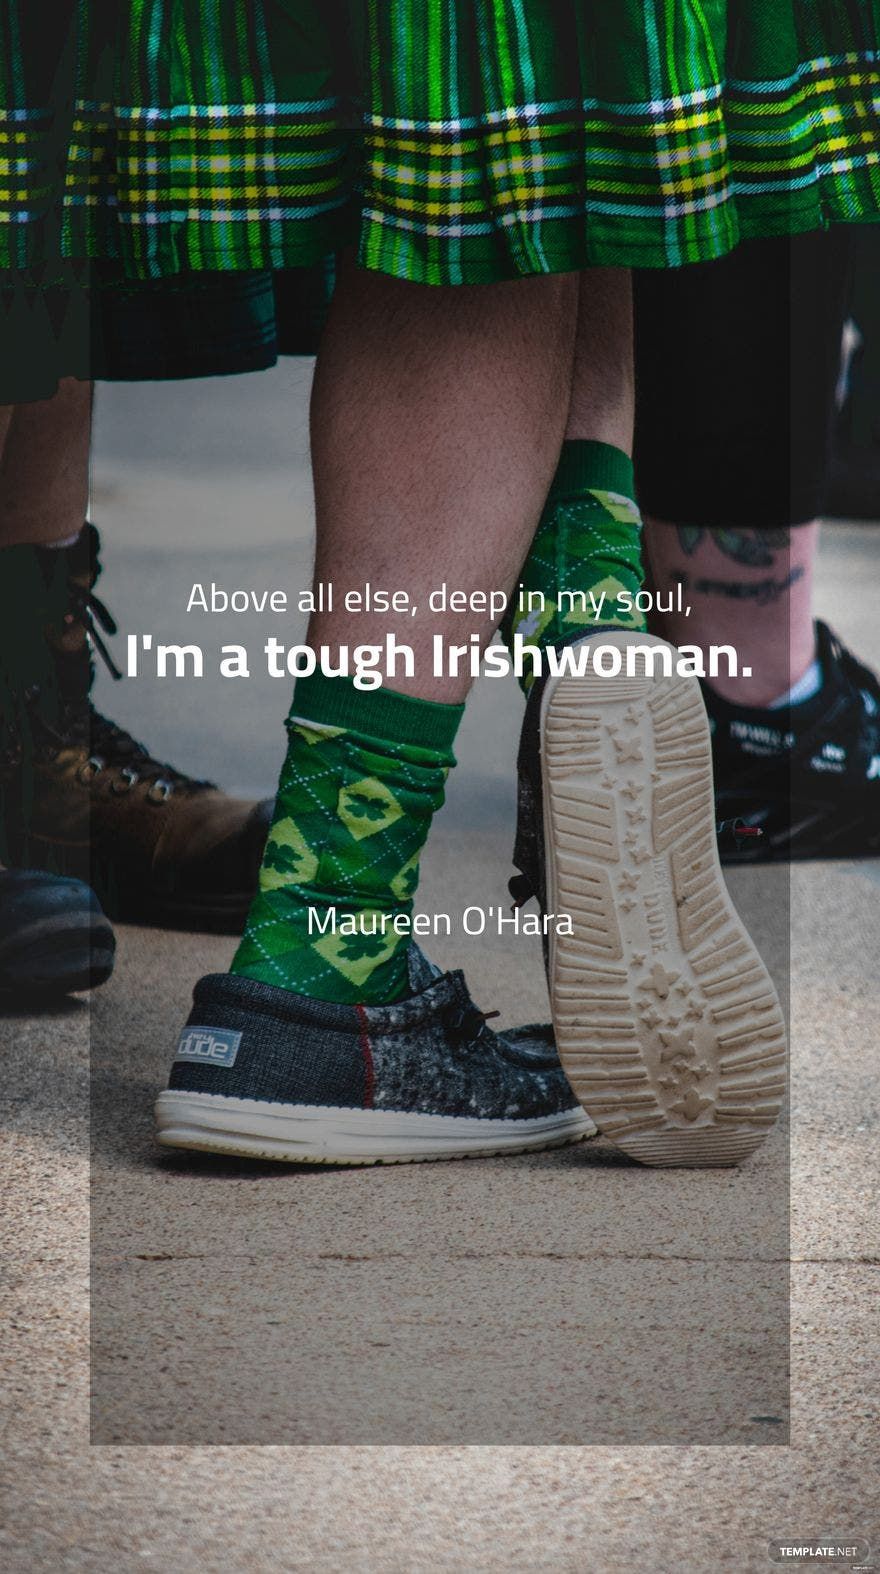 Free Maureen O'Hara - Above all else, deep in my soul, I'm a tough Irishwoman. in JPEG